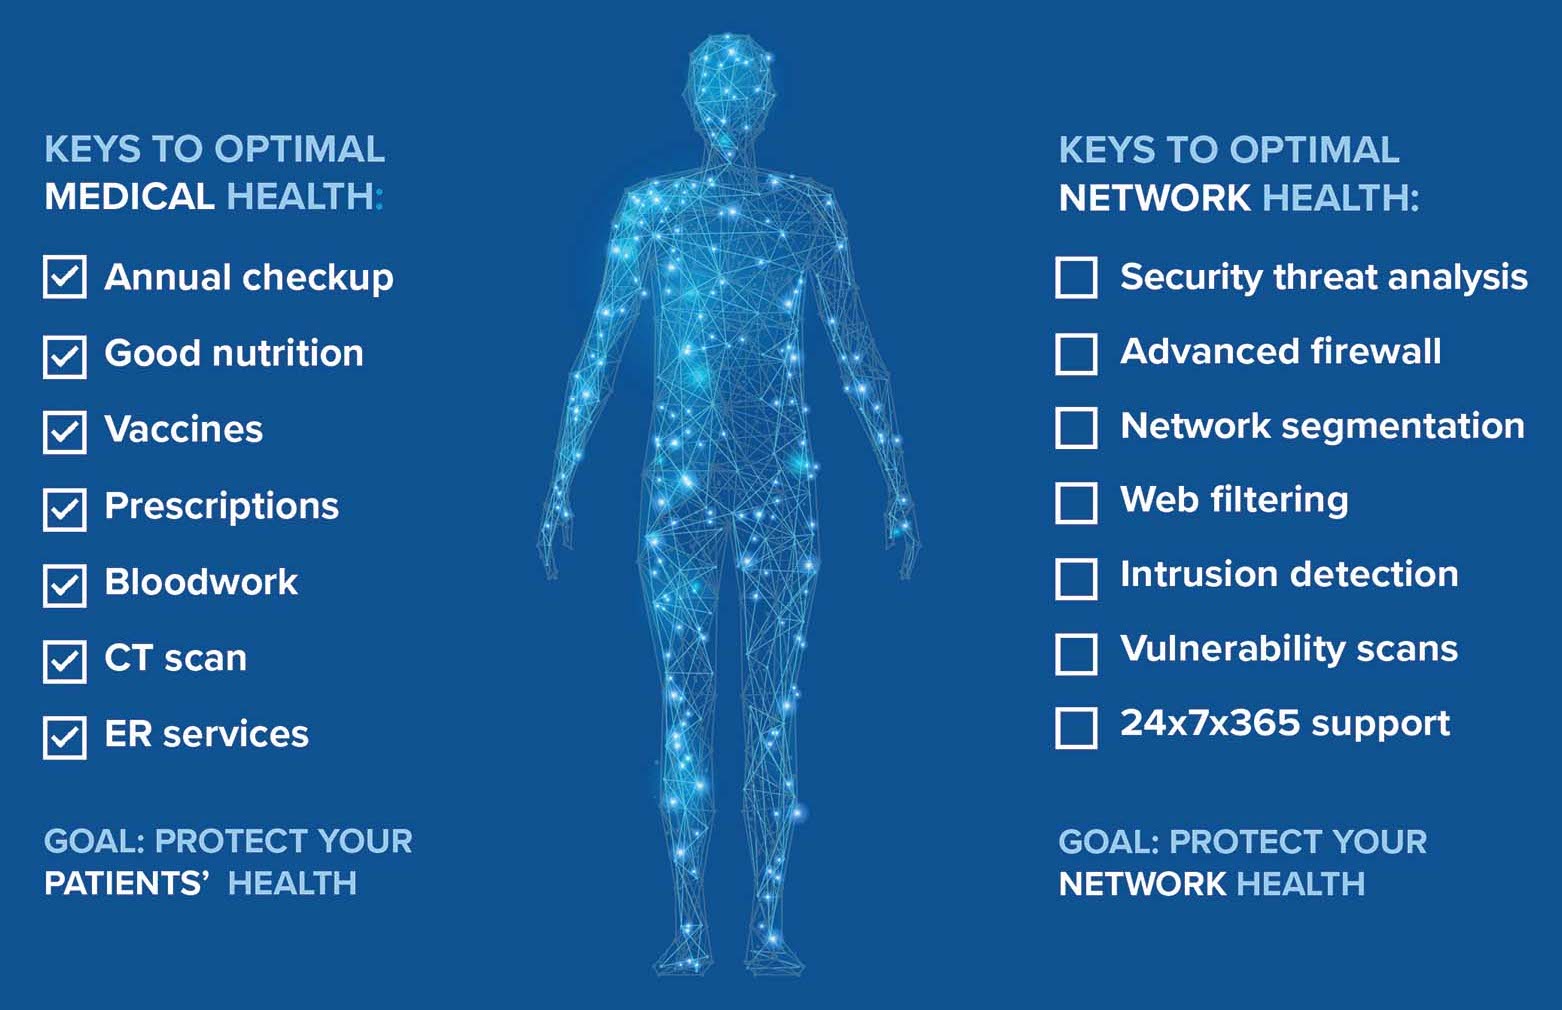 Keys to Optimal Network Health